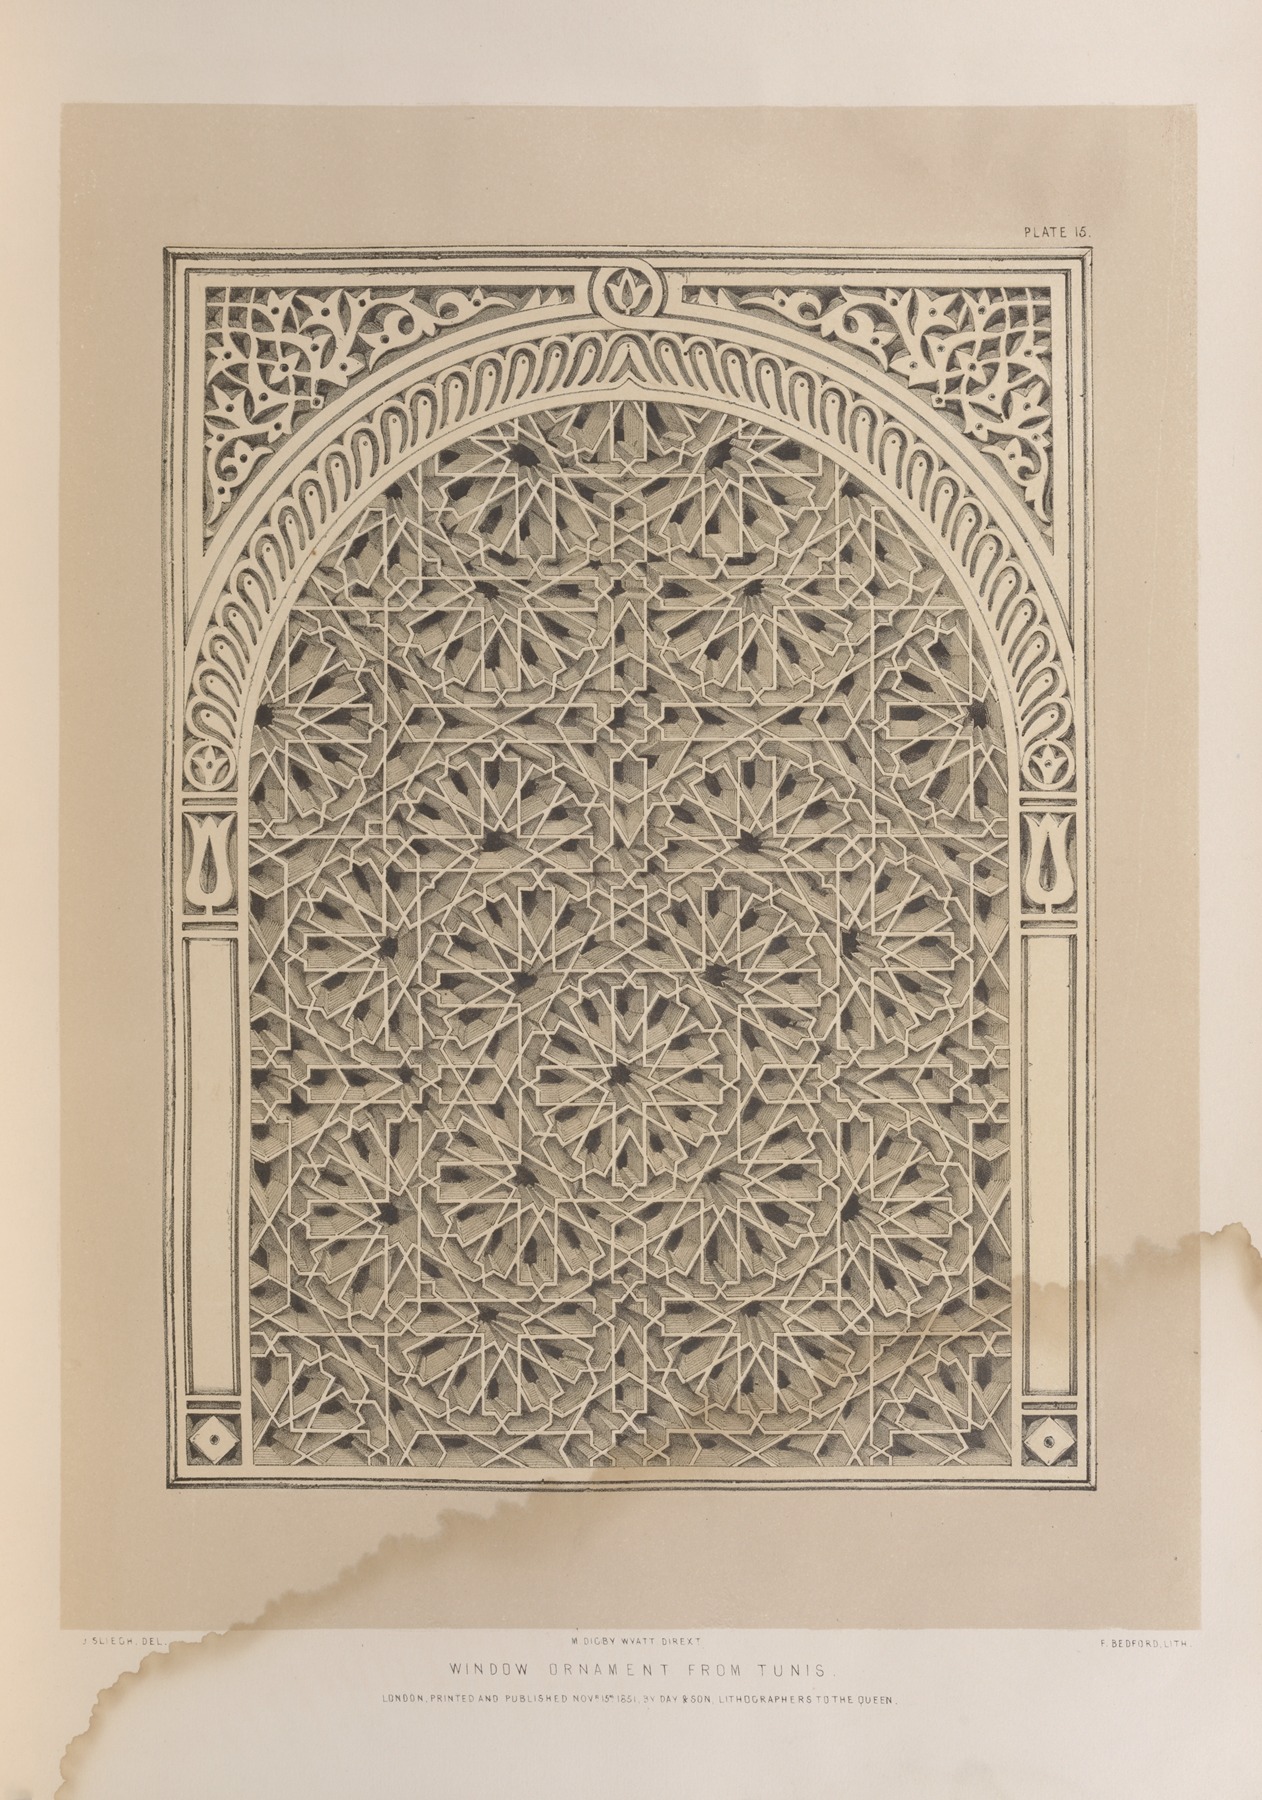 Matthew Digby Wyatt - Window ornament from Tunis